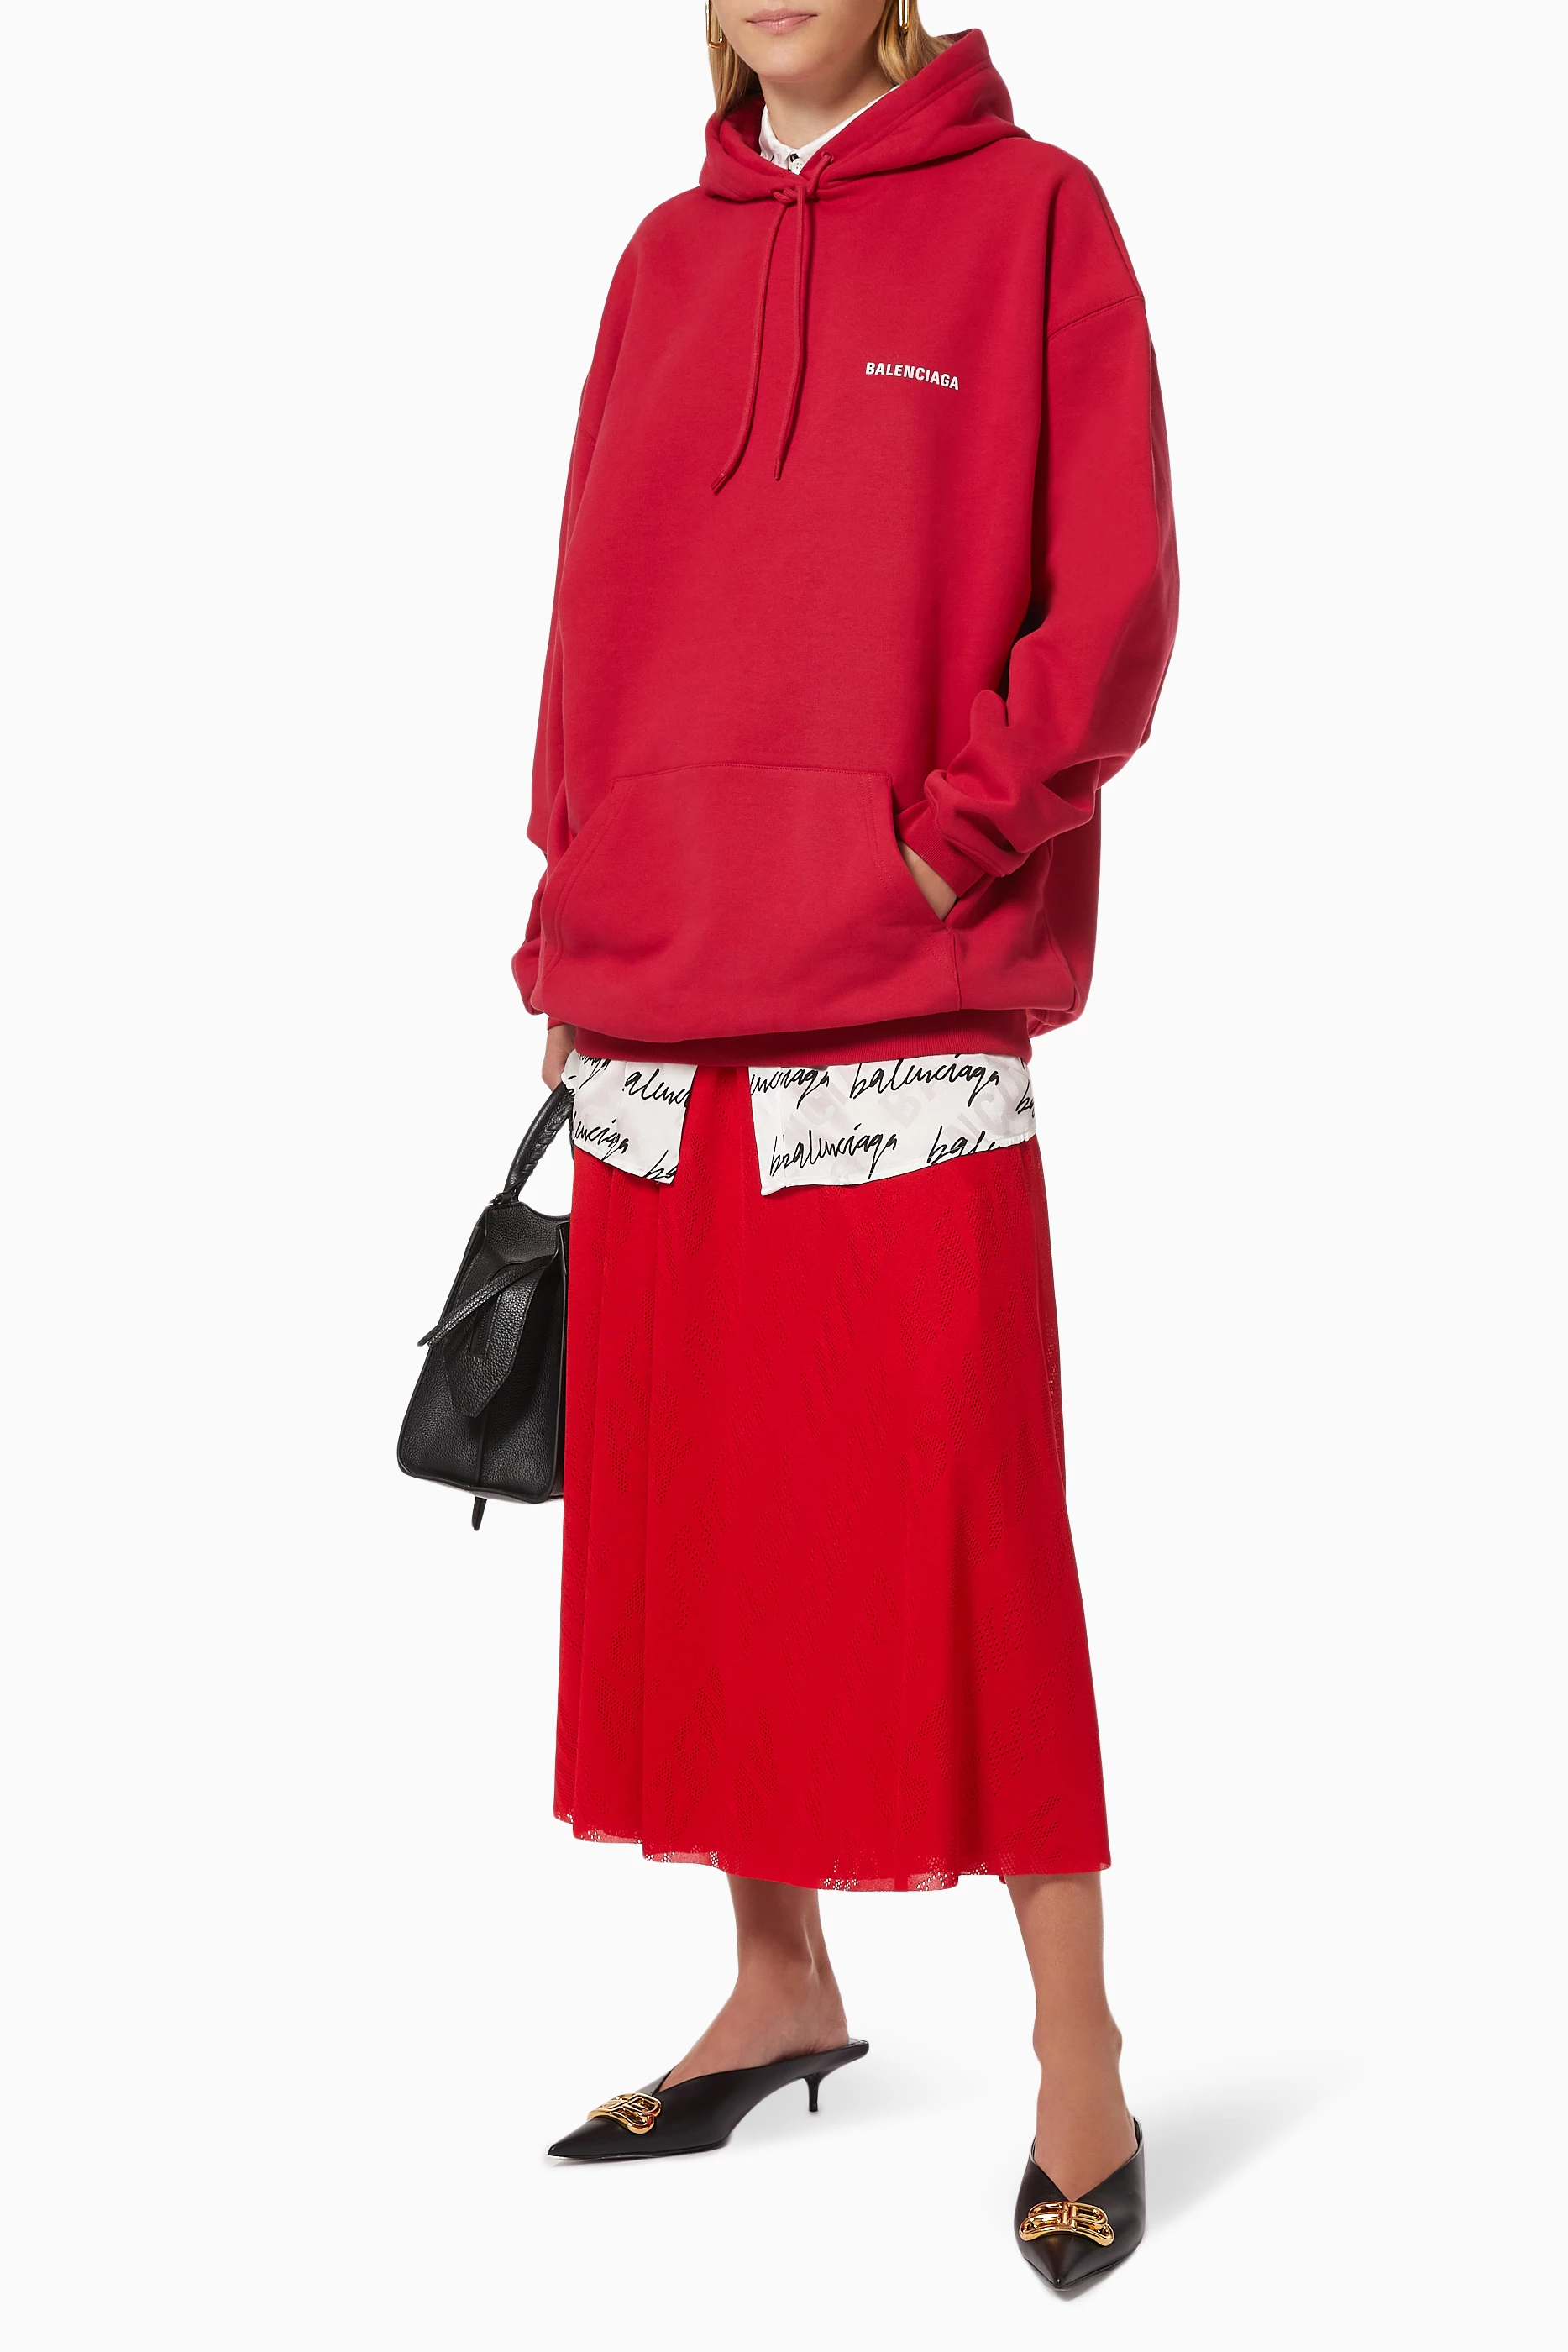 Primary Red Organic Cotton Hooded Sweatshirt — Original Favorites